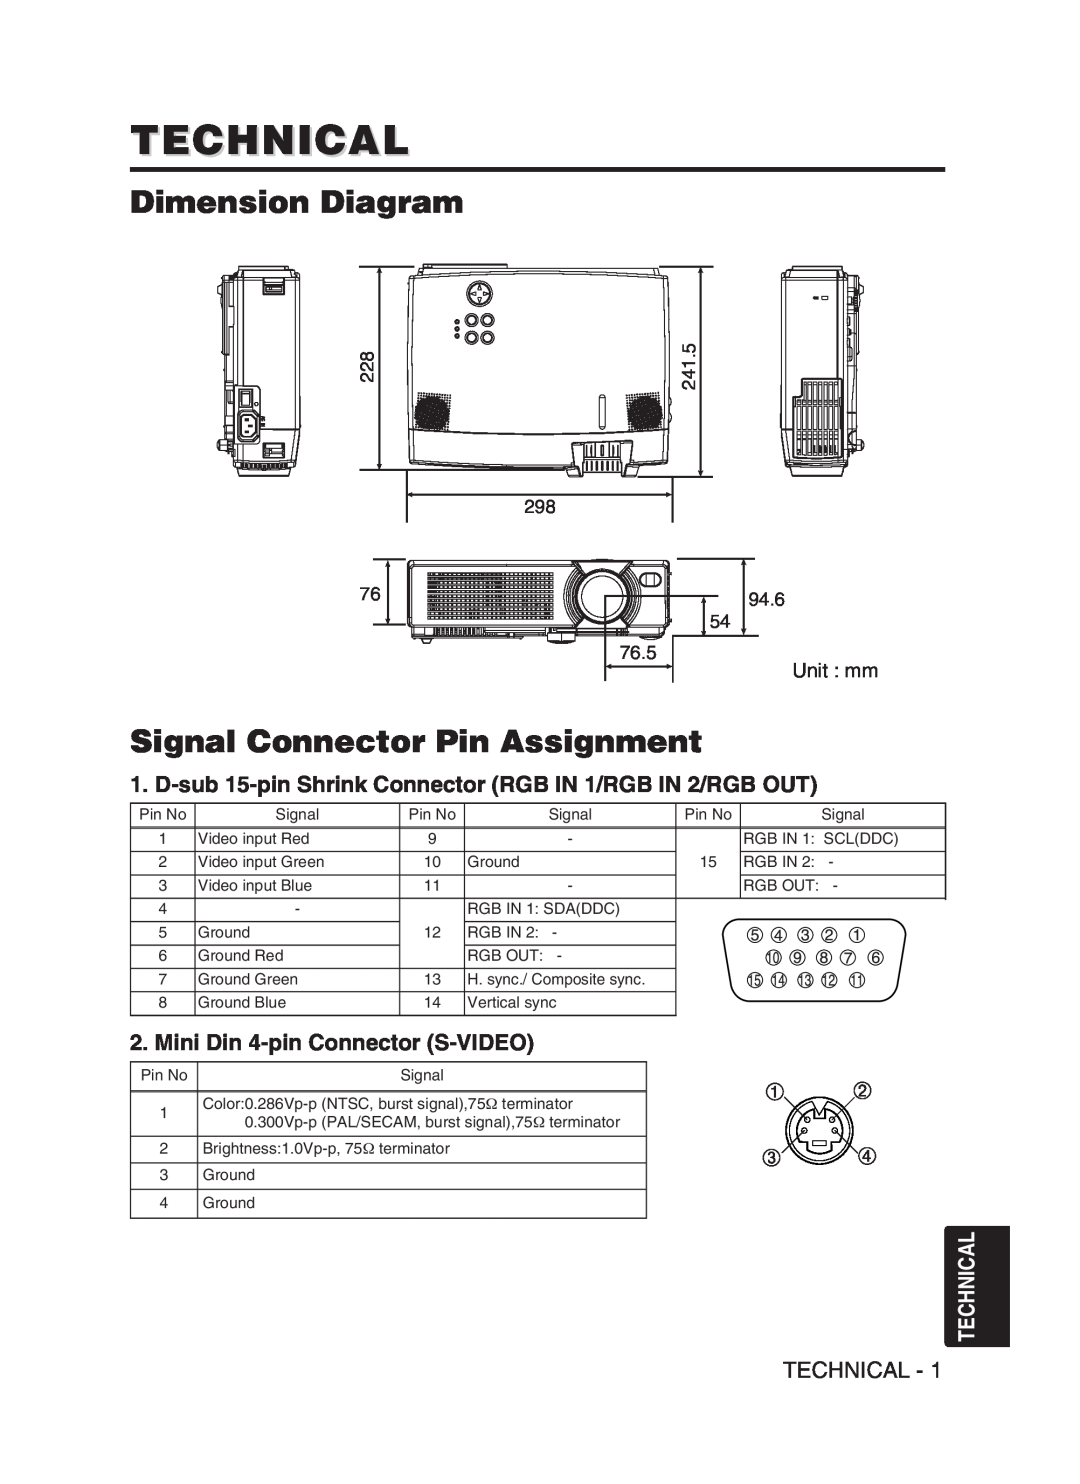 Hitachi CP-S370W Technical, Dimension Diagram, Signal Connector Pin Assignment, Mini Din 4-pin Connector S-VIDEO, 1514 